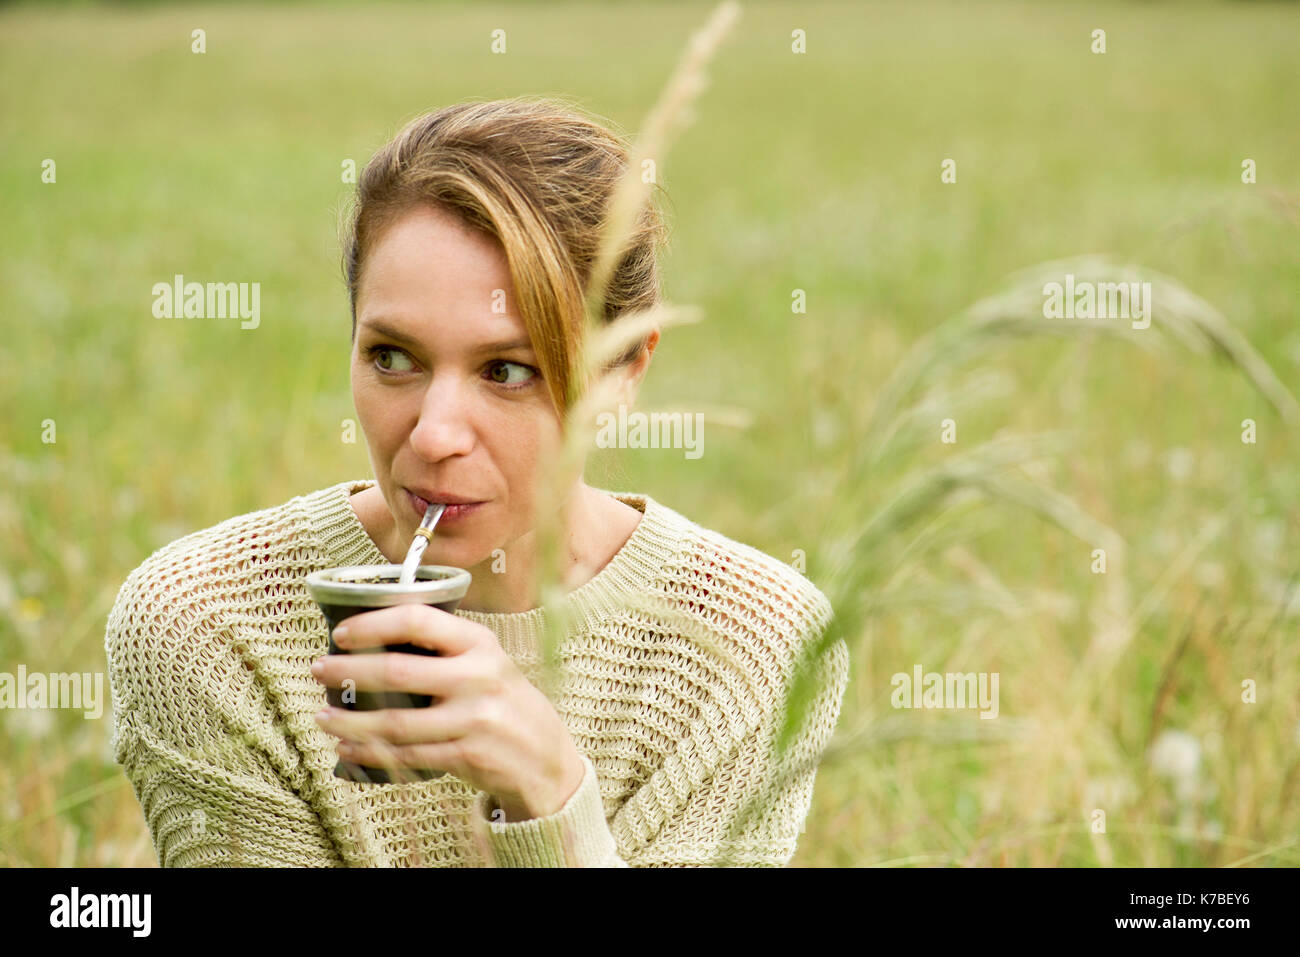 Woman drinking yerba mate, portrait Stock Photo